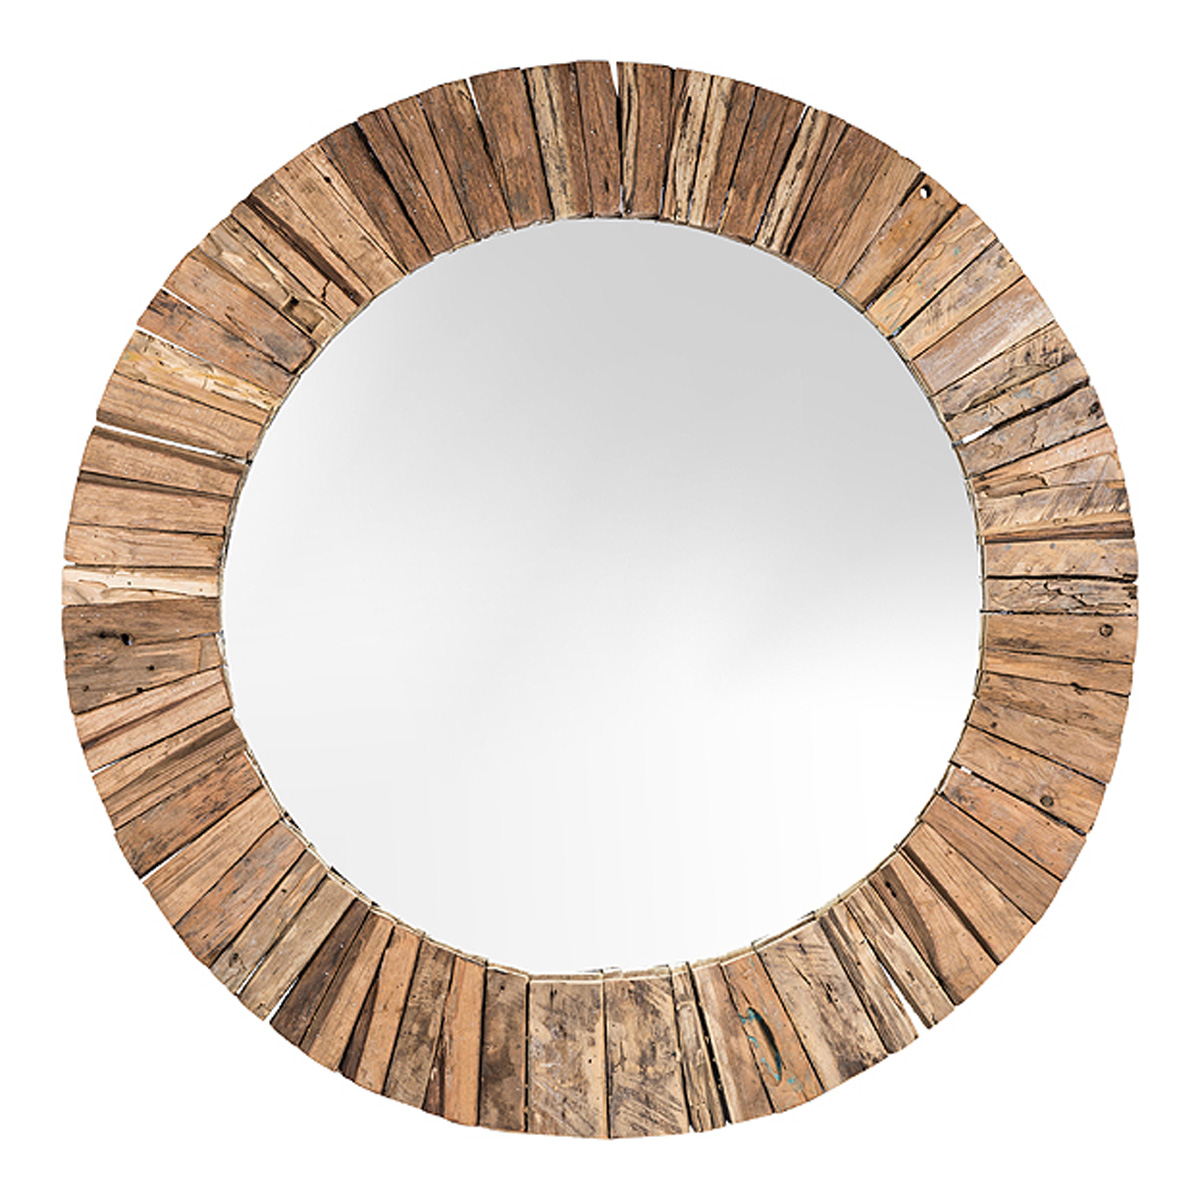 Livingfurn Dakota ronde spiegel riverwood 40cm